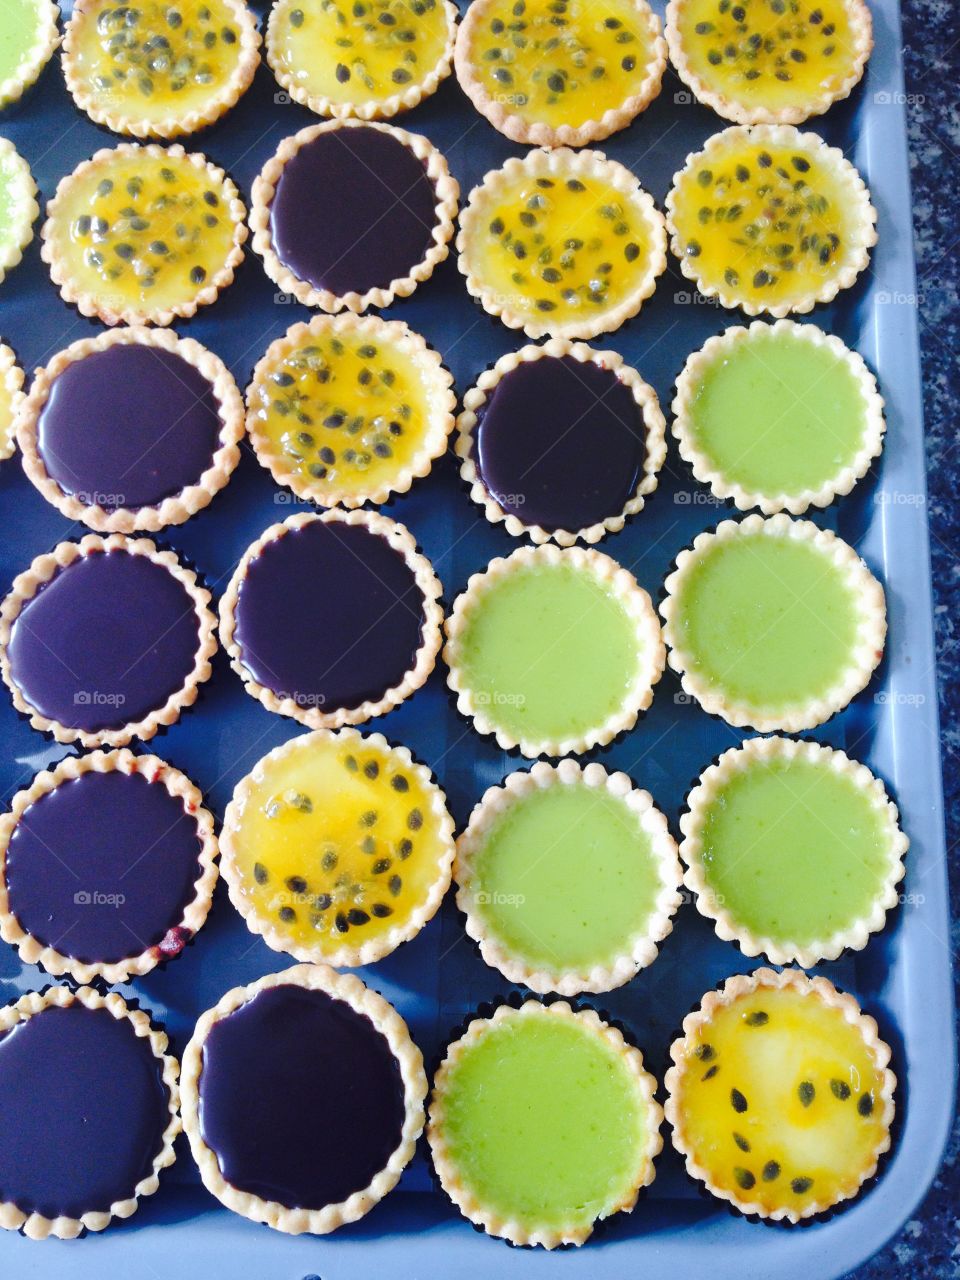 Mini tarts. My kitchen's story series
